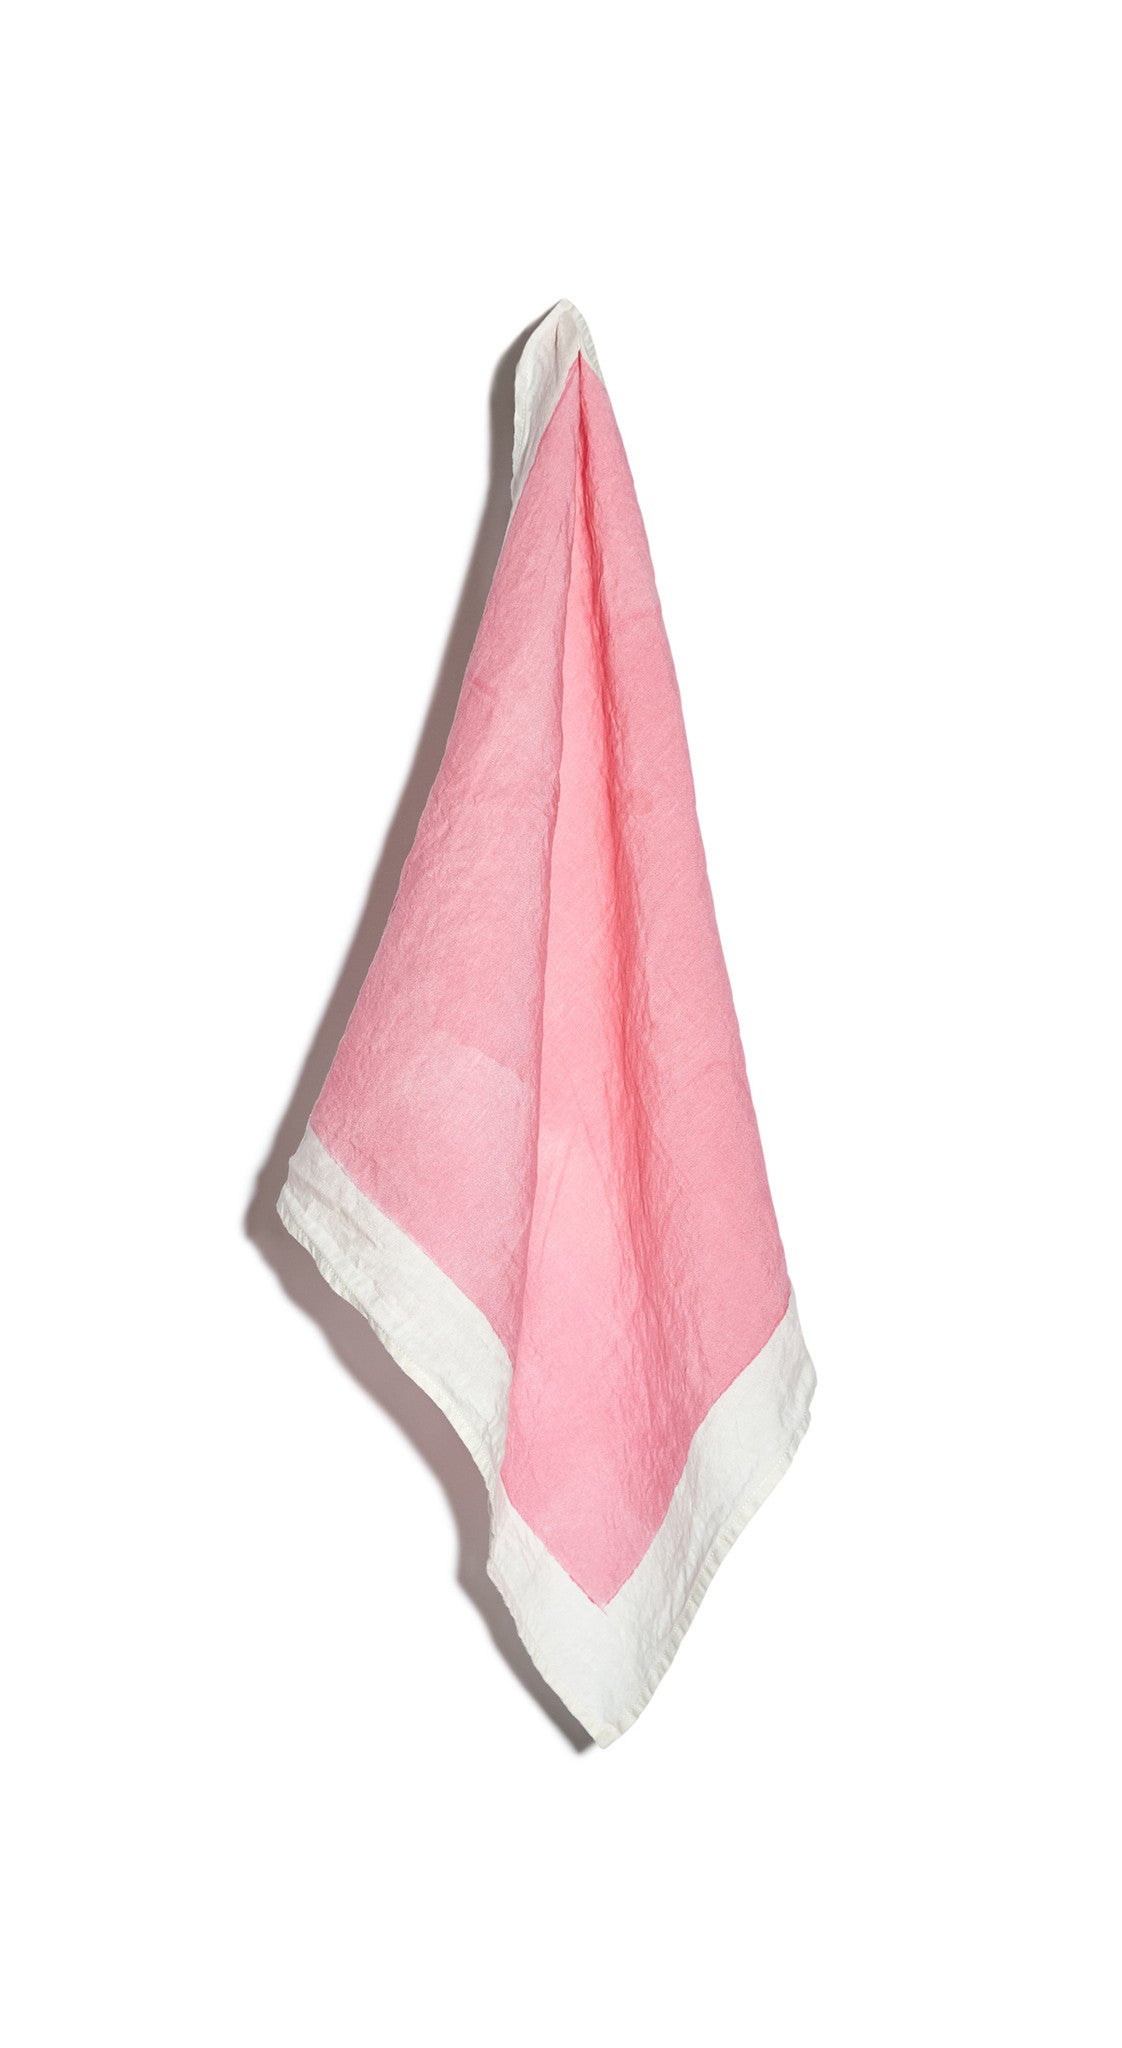 Full Field Linen Napkin in Fuchsia Pink, 50x50cm